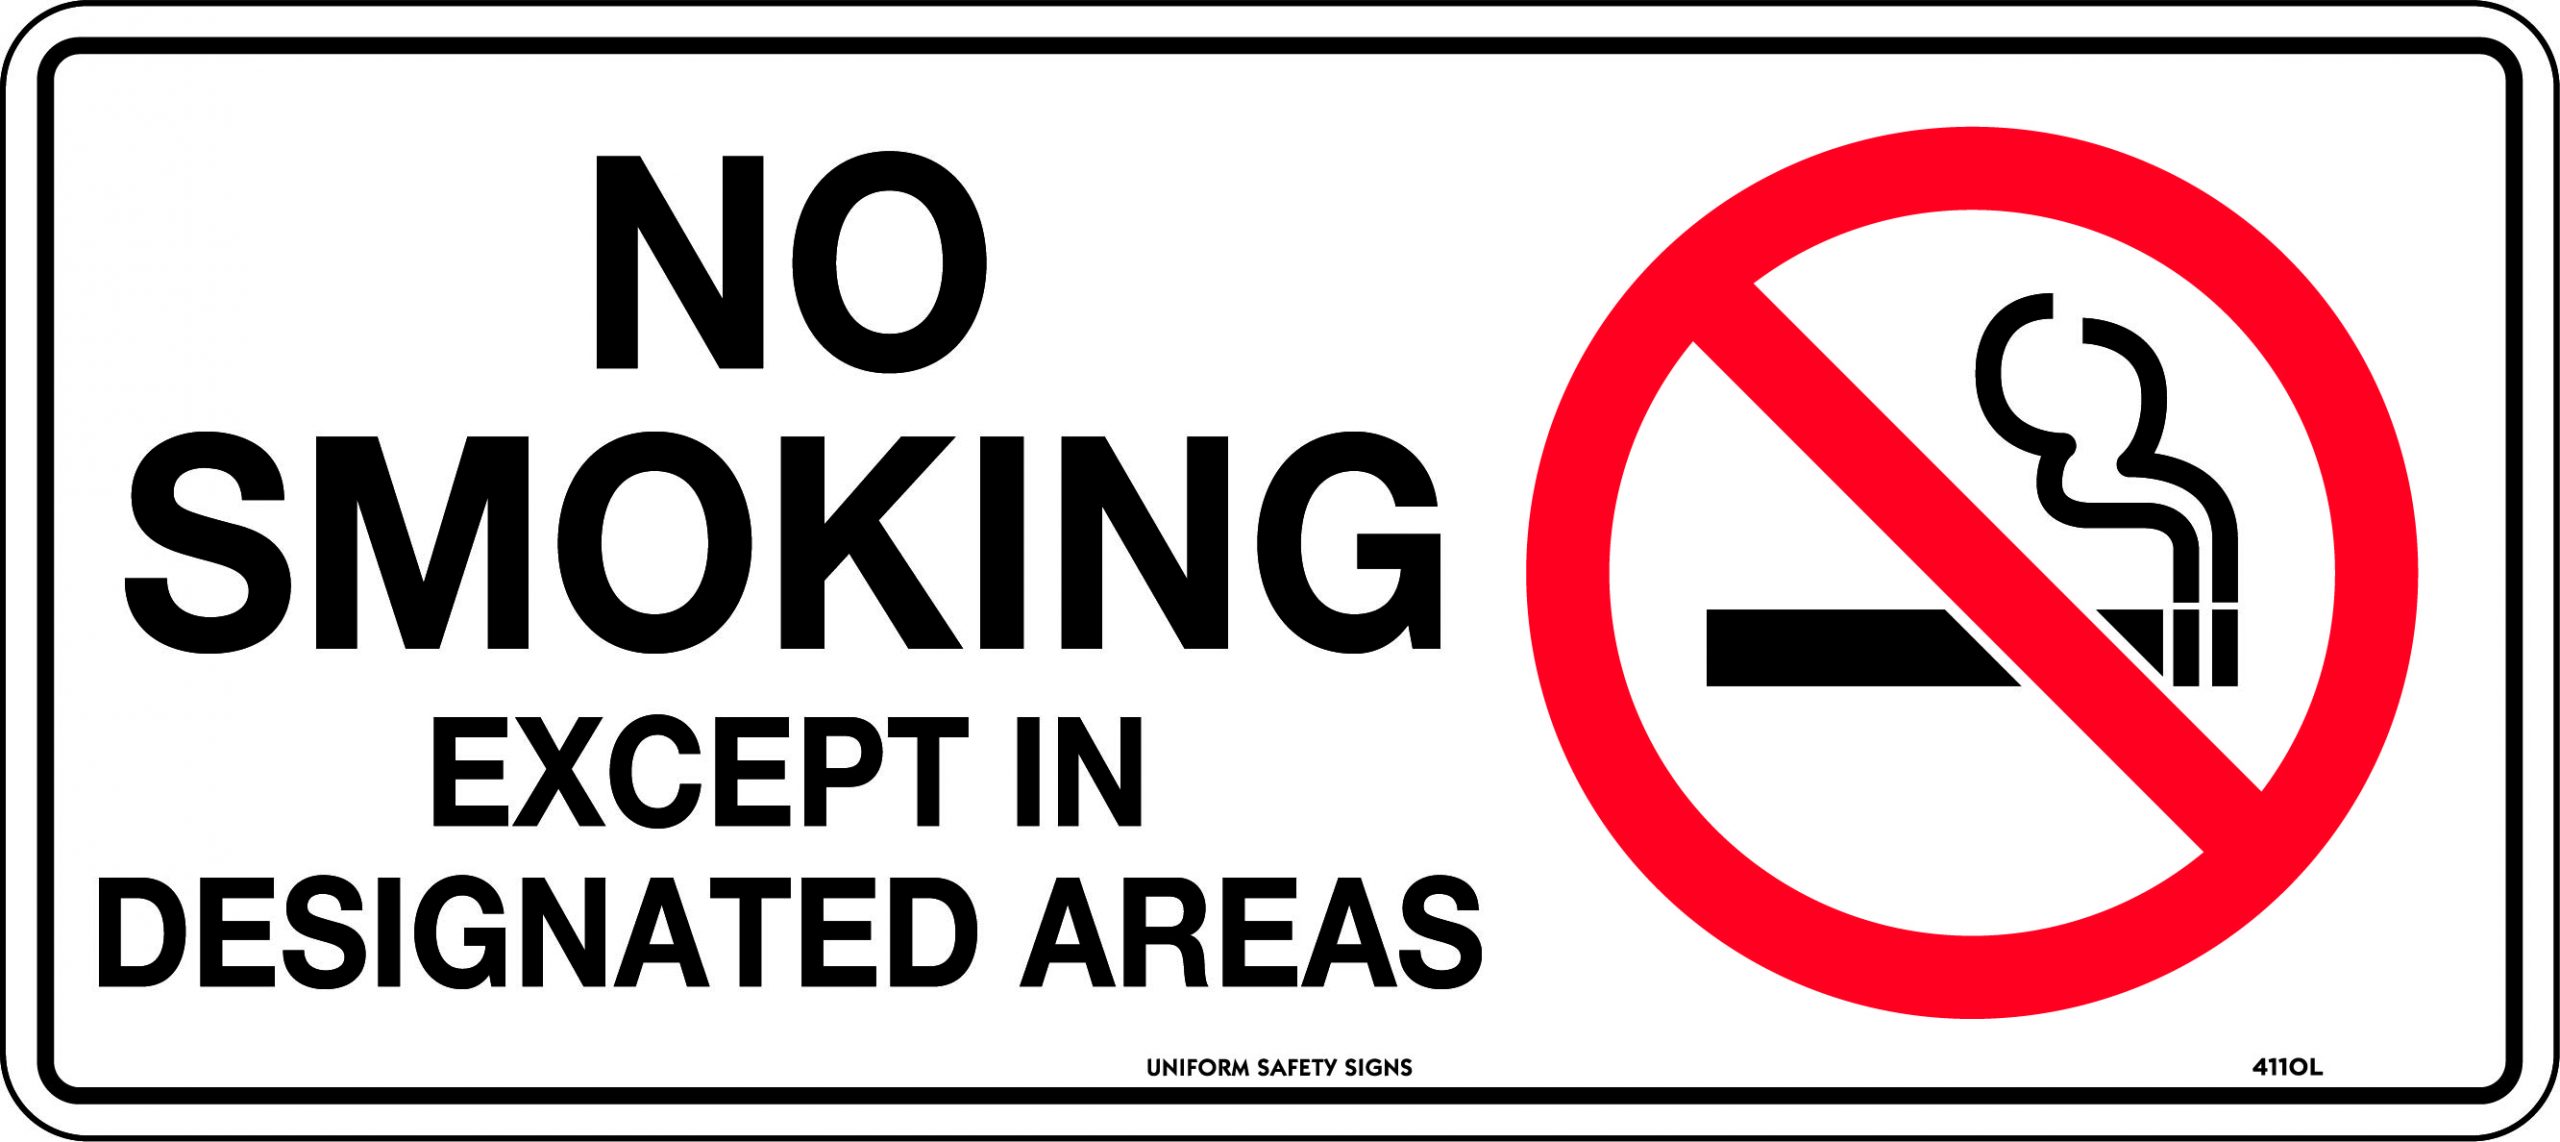 No Smoking Except In Designated Areas Uniform Safety Signs